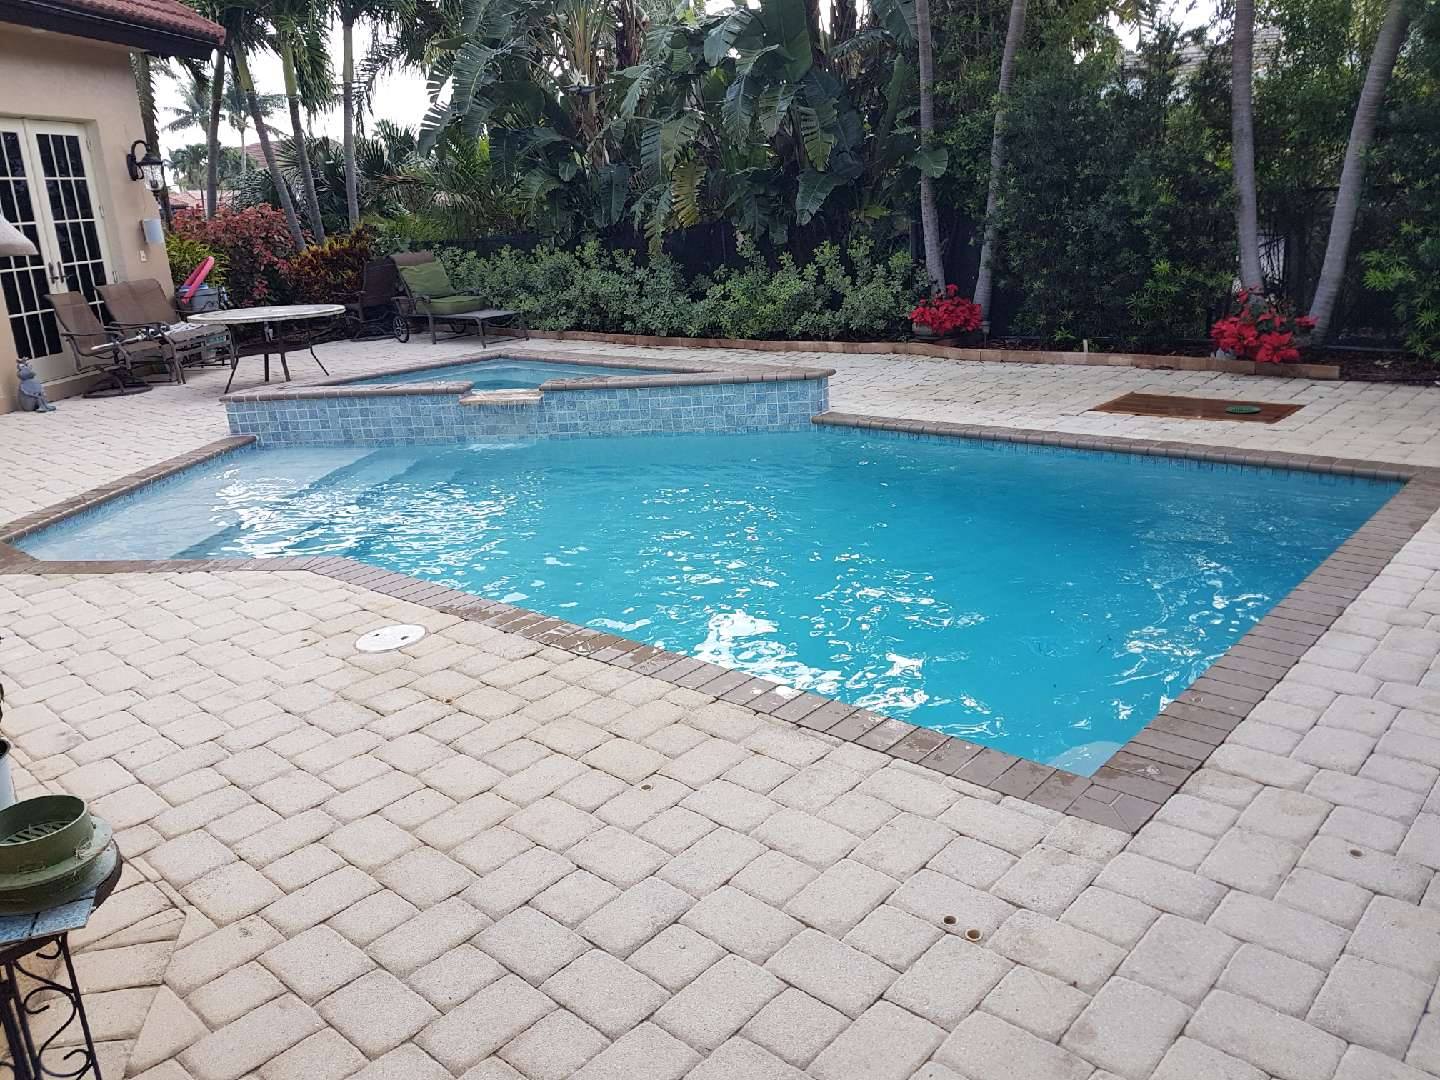 South Florida Pool Builders